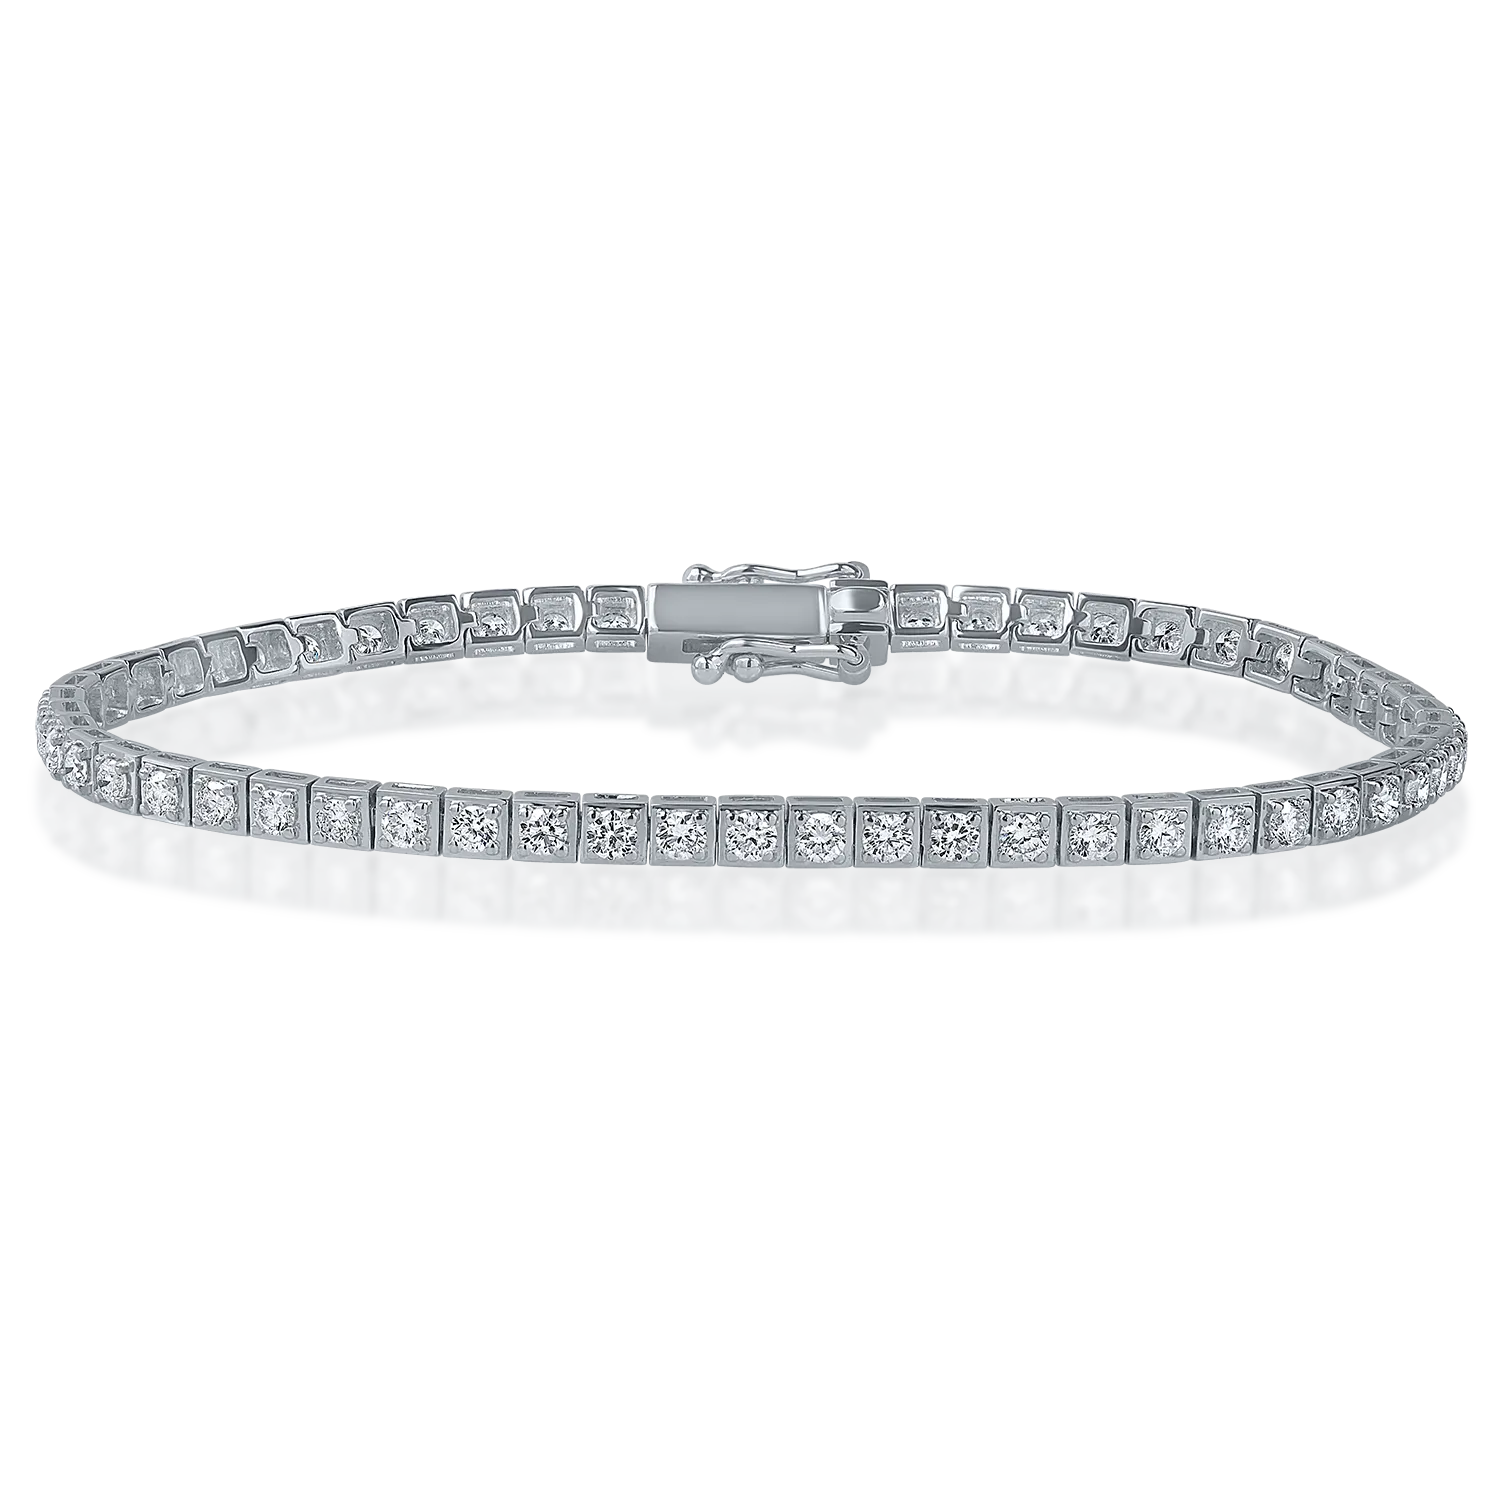 White gold tennis bracelet with 1.5ct diamonds